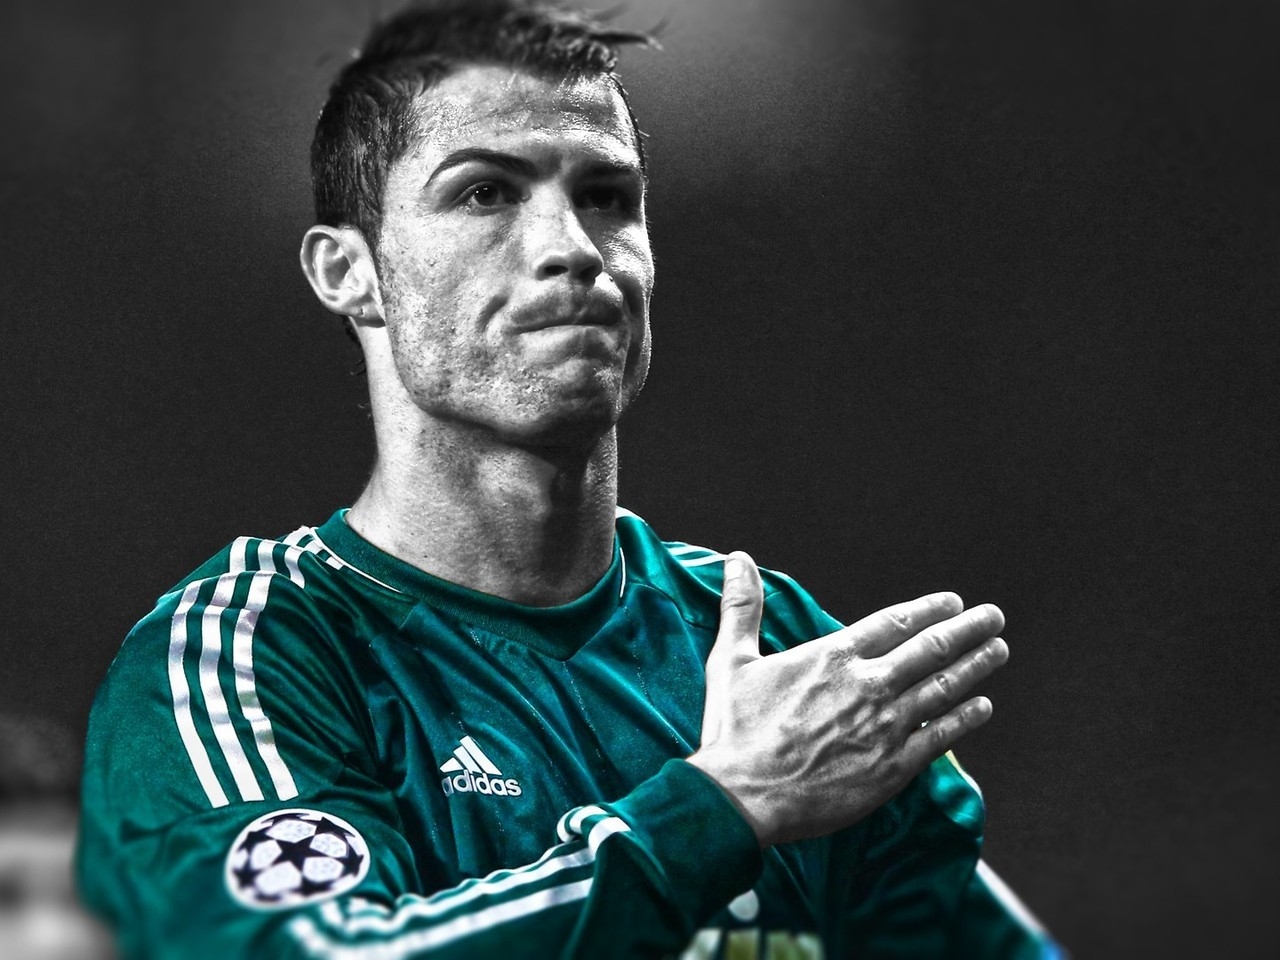 Cristiano Ronaldo Monochrome for 1280 x 960 resolution